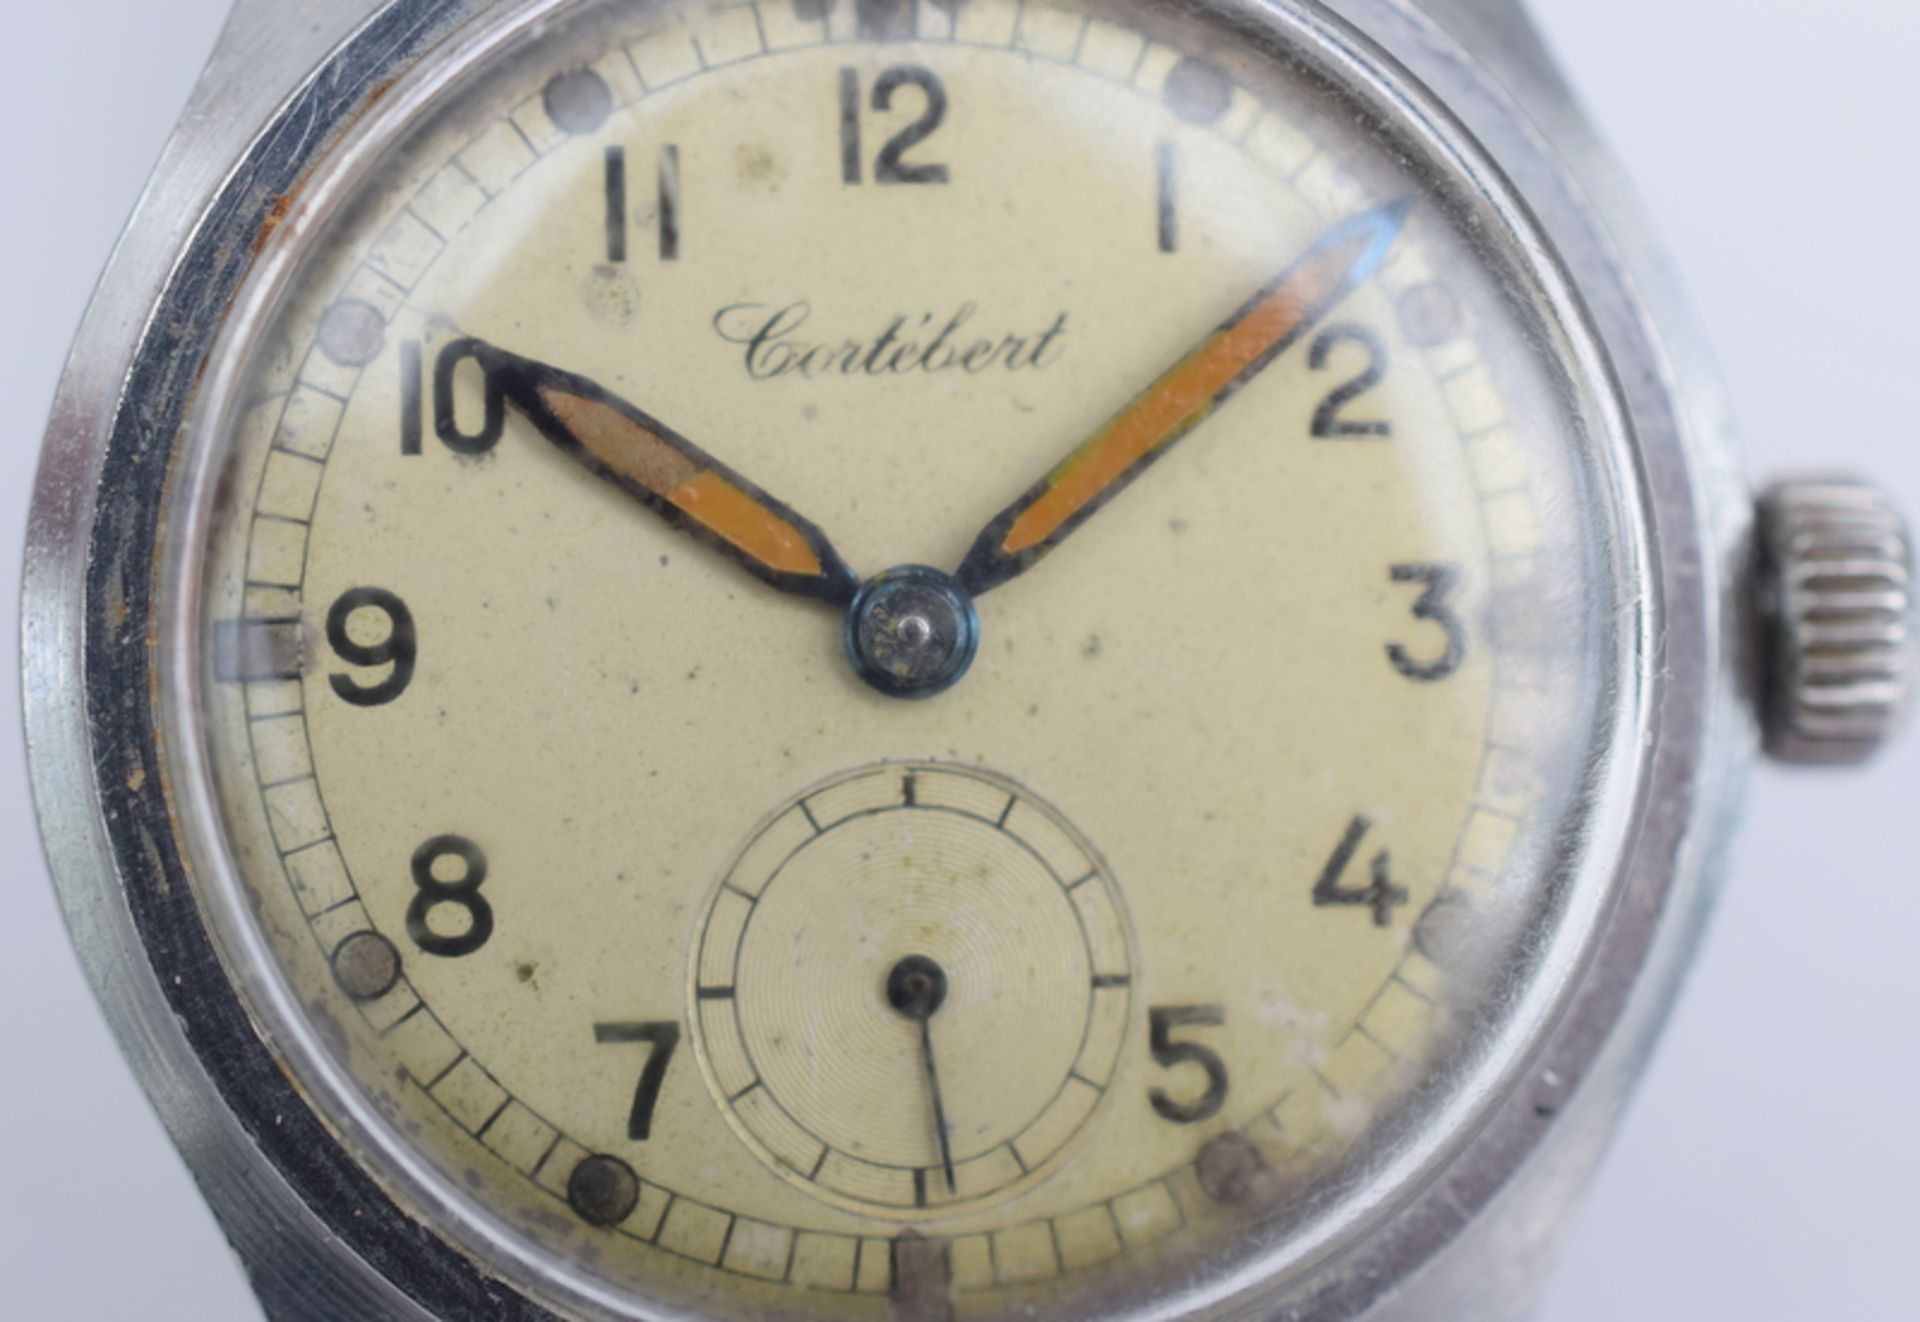 Cortebert Military Style Wristwatch - Image 4 of 5